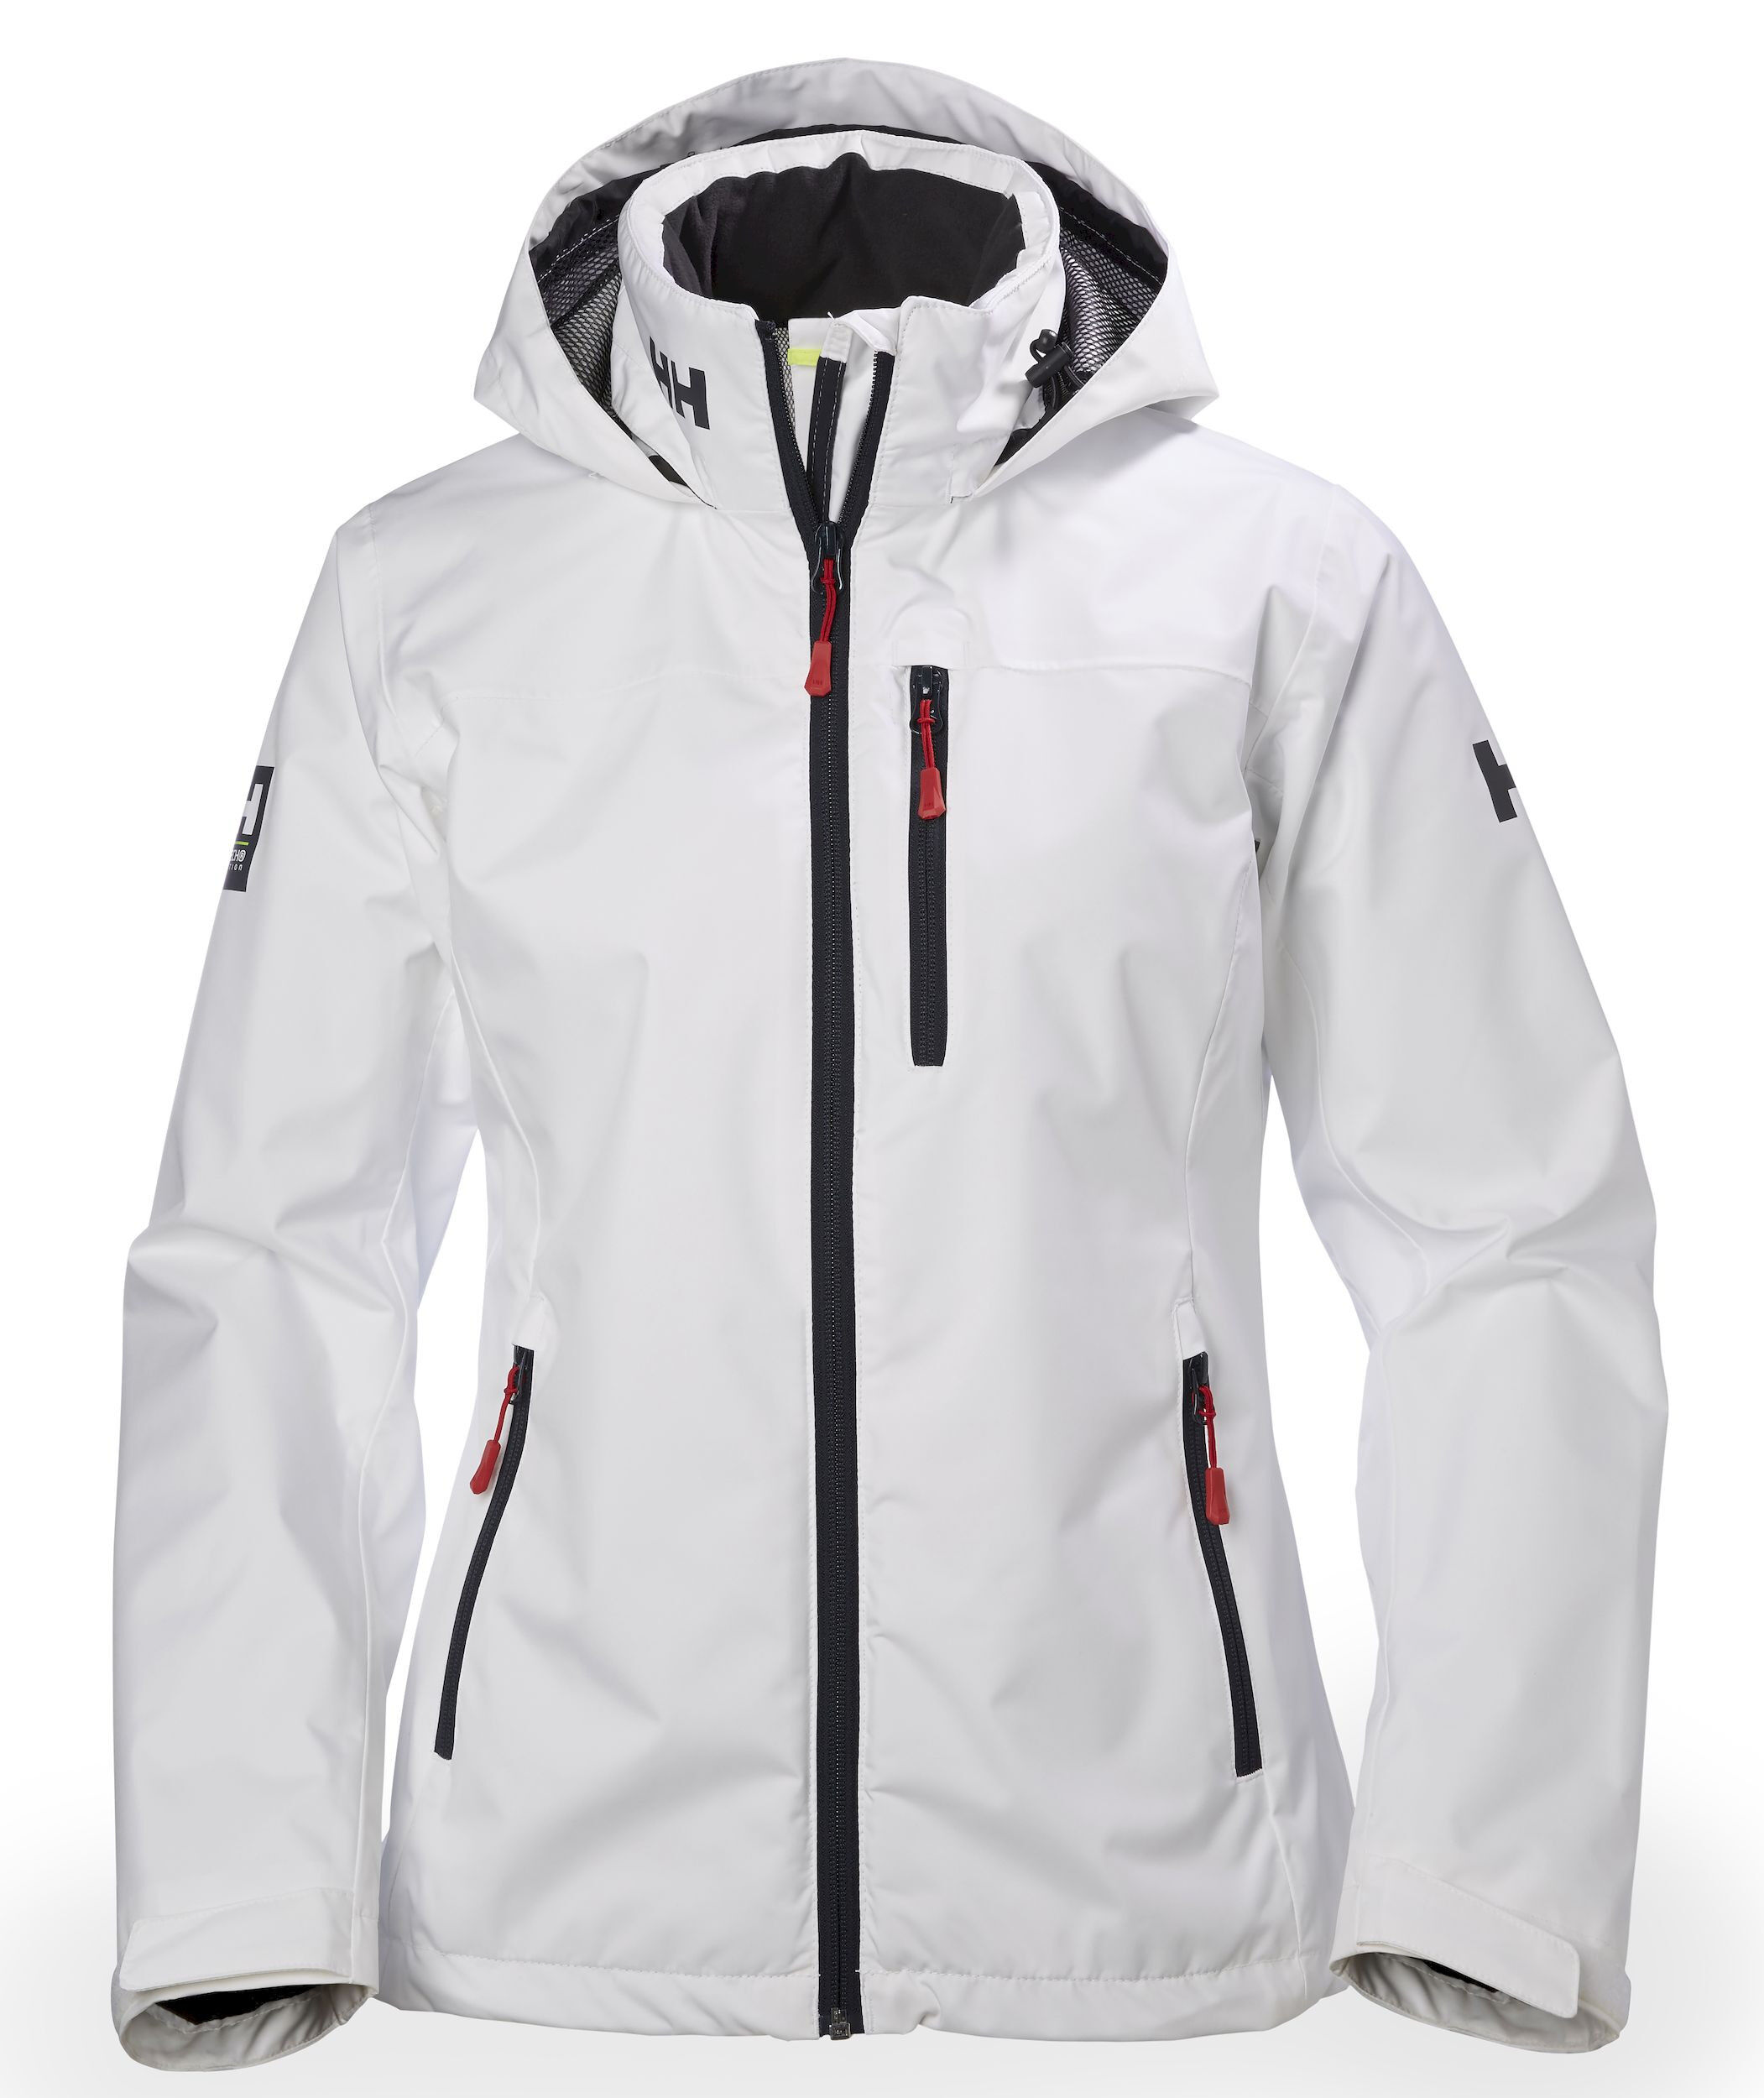 Helly Hansen Crew Hooded Midlayer Jacket - Waterproof jacket - Women's